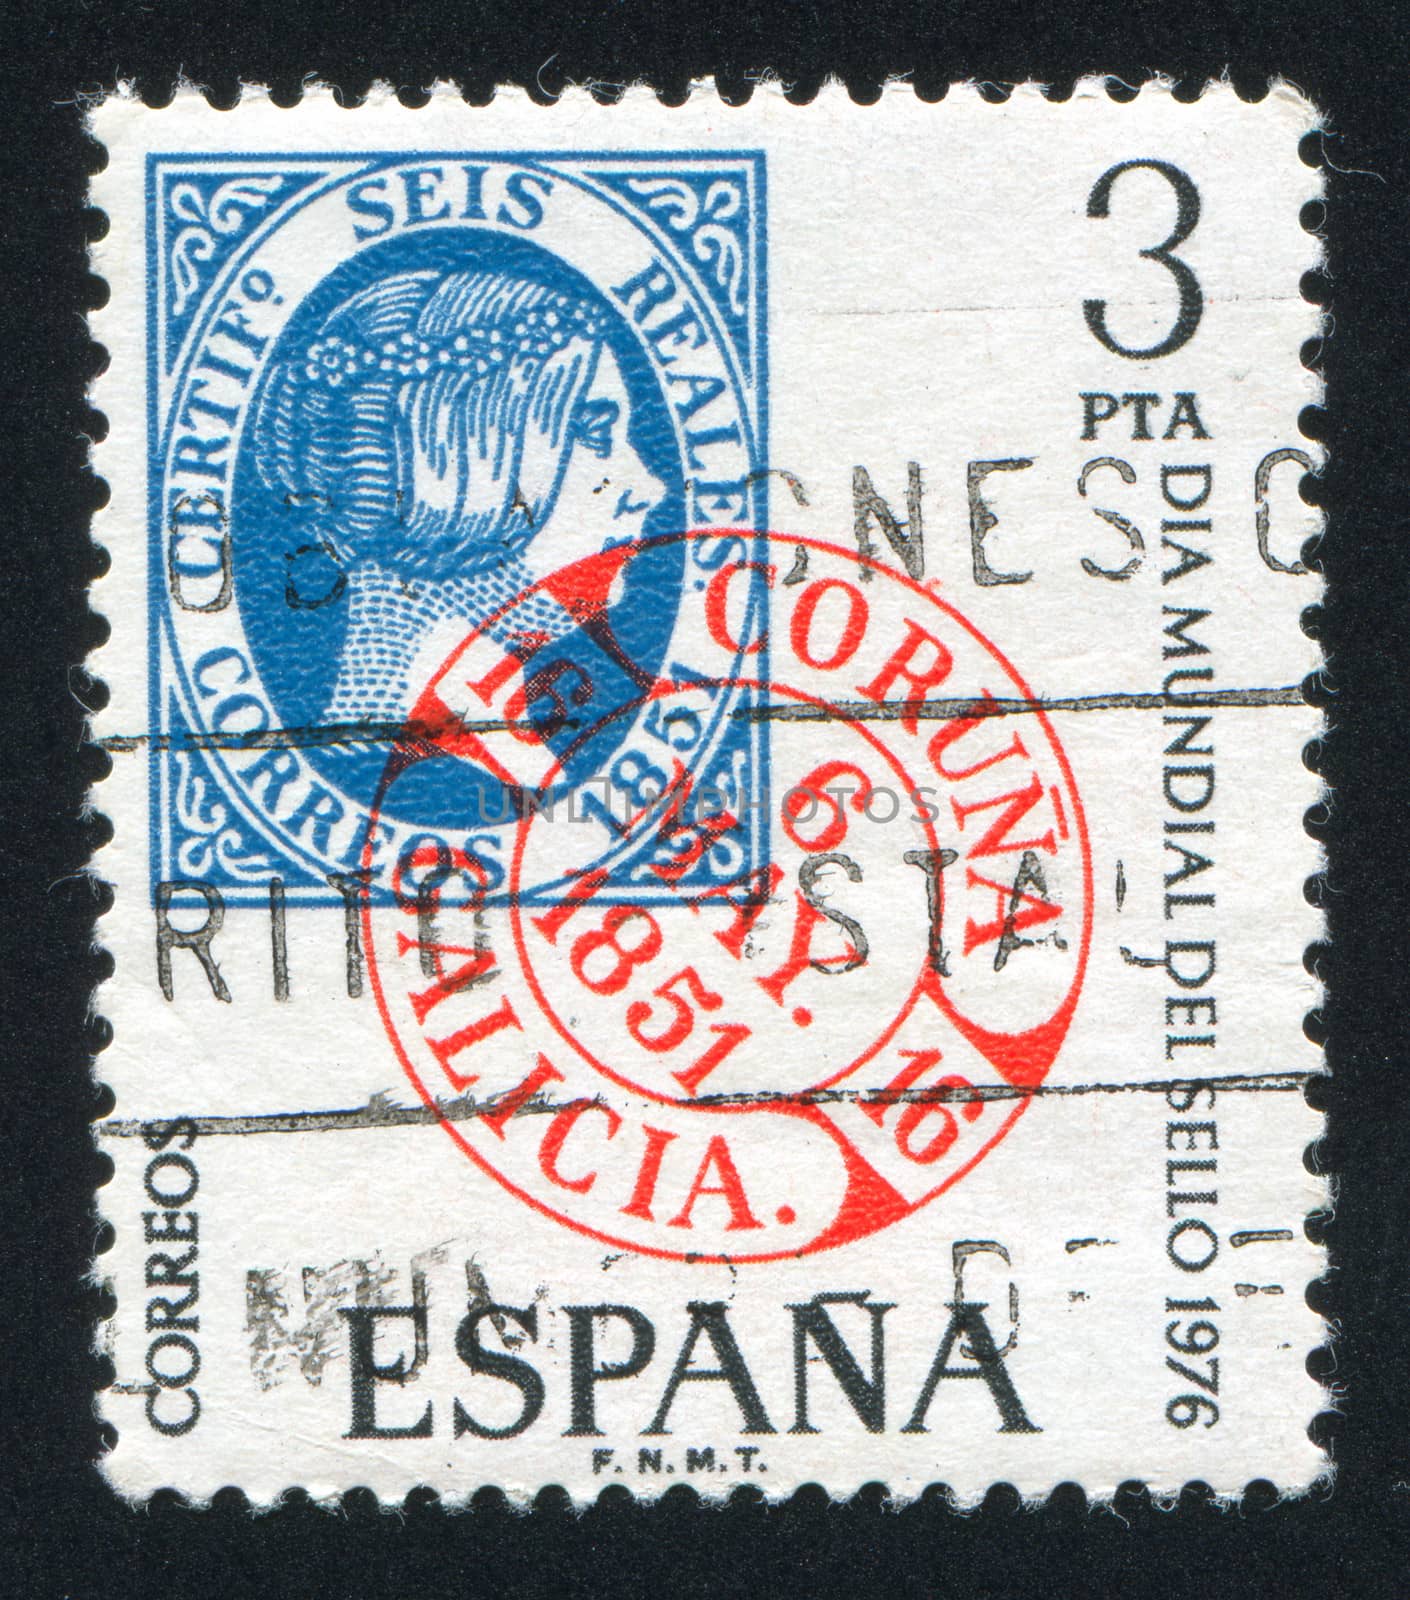 SPAIN - CIRCA 1976: stamp printed by Spain, shows Isabella, circa 1976